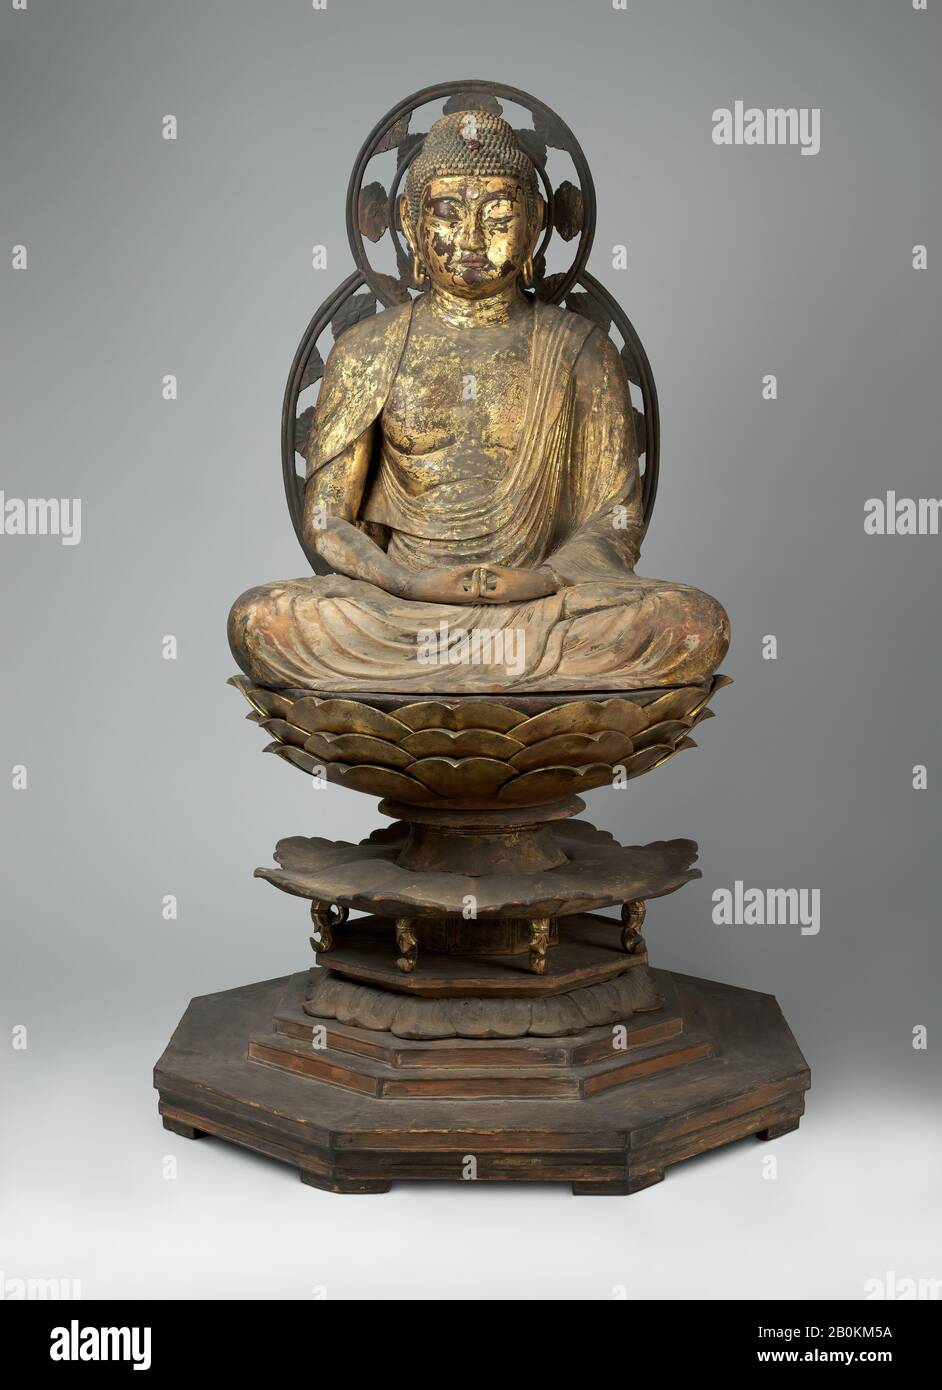 Amida Nyorai, Japan, Kamakura period (1185–1333), Date ca. 1250, Japan, Wood with gold leaf, H. 34 5/8 in. (87.9 cm); W. 28 3/4 in. (73 cm); D. 22 3/4 in. (57.8 cm), Overall (with pedestal): H. 61 in. (154.9 cm); W. 39 in. (99.1 cm); D.39 in. (99.1 cm), Sculpture Stock Photo